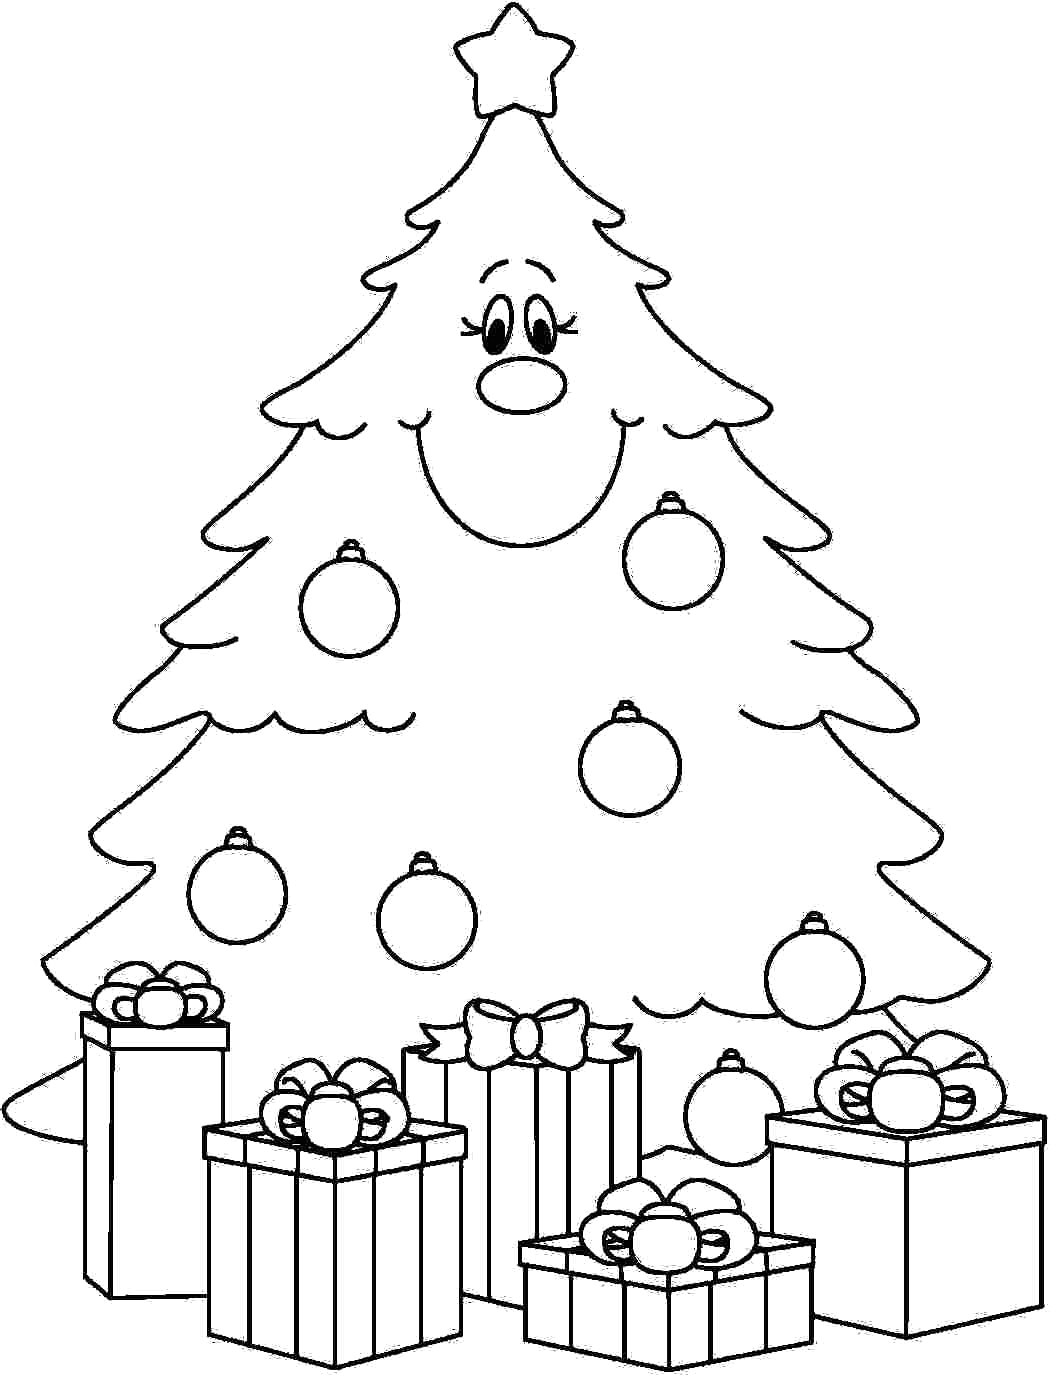 Blank Christmas Tree Coloring Page at Free printable